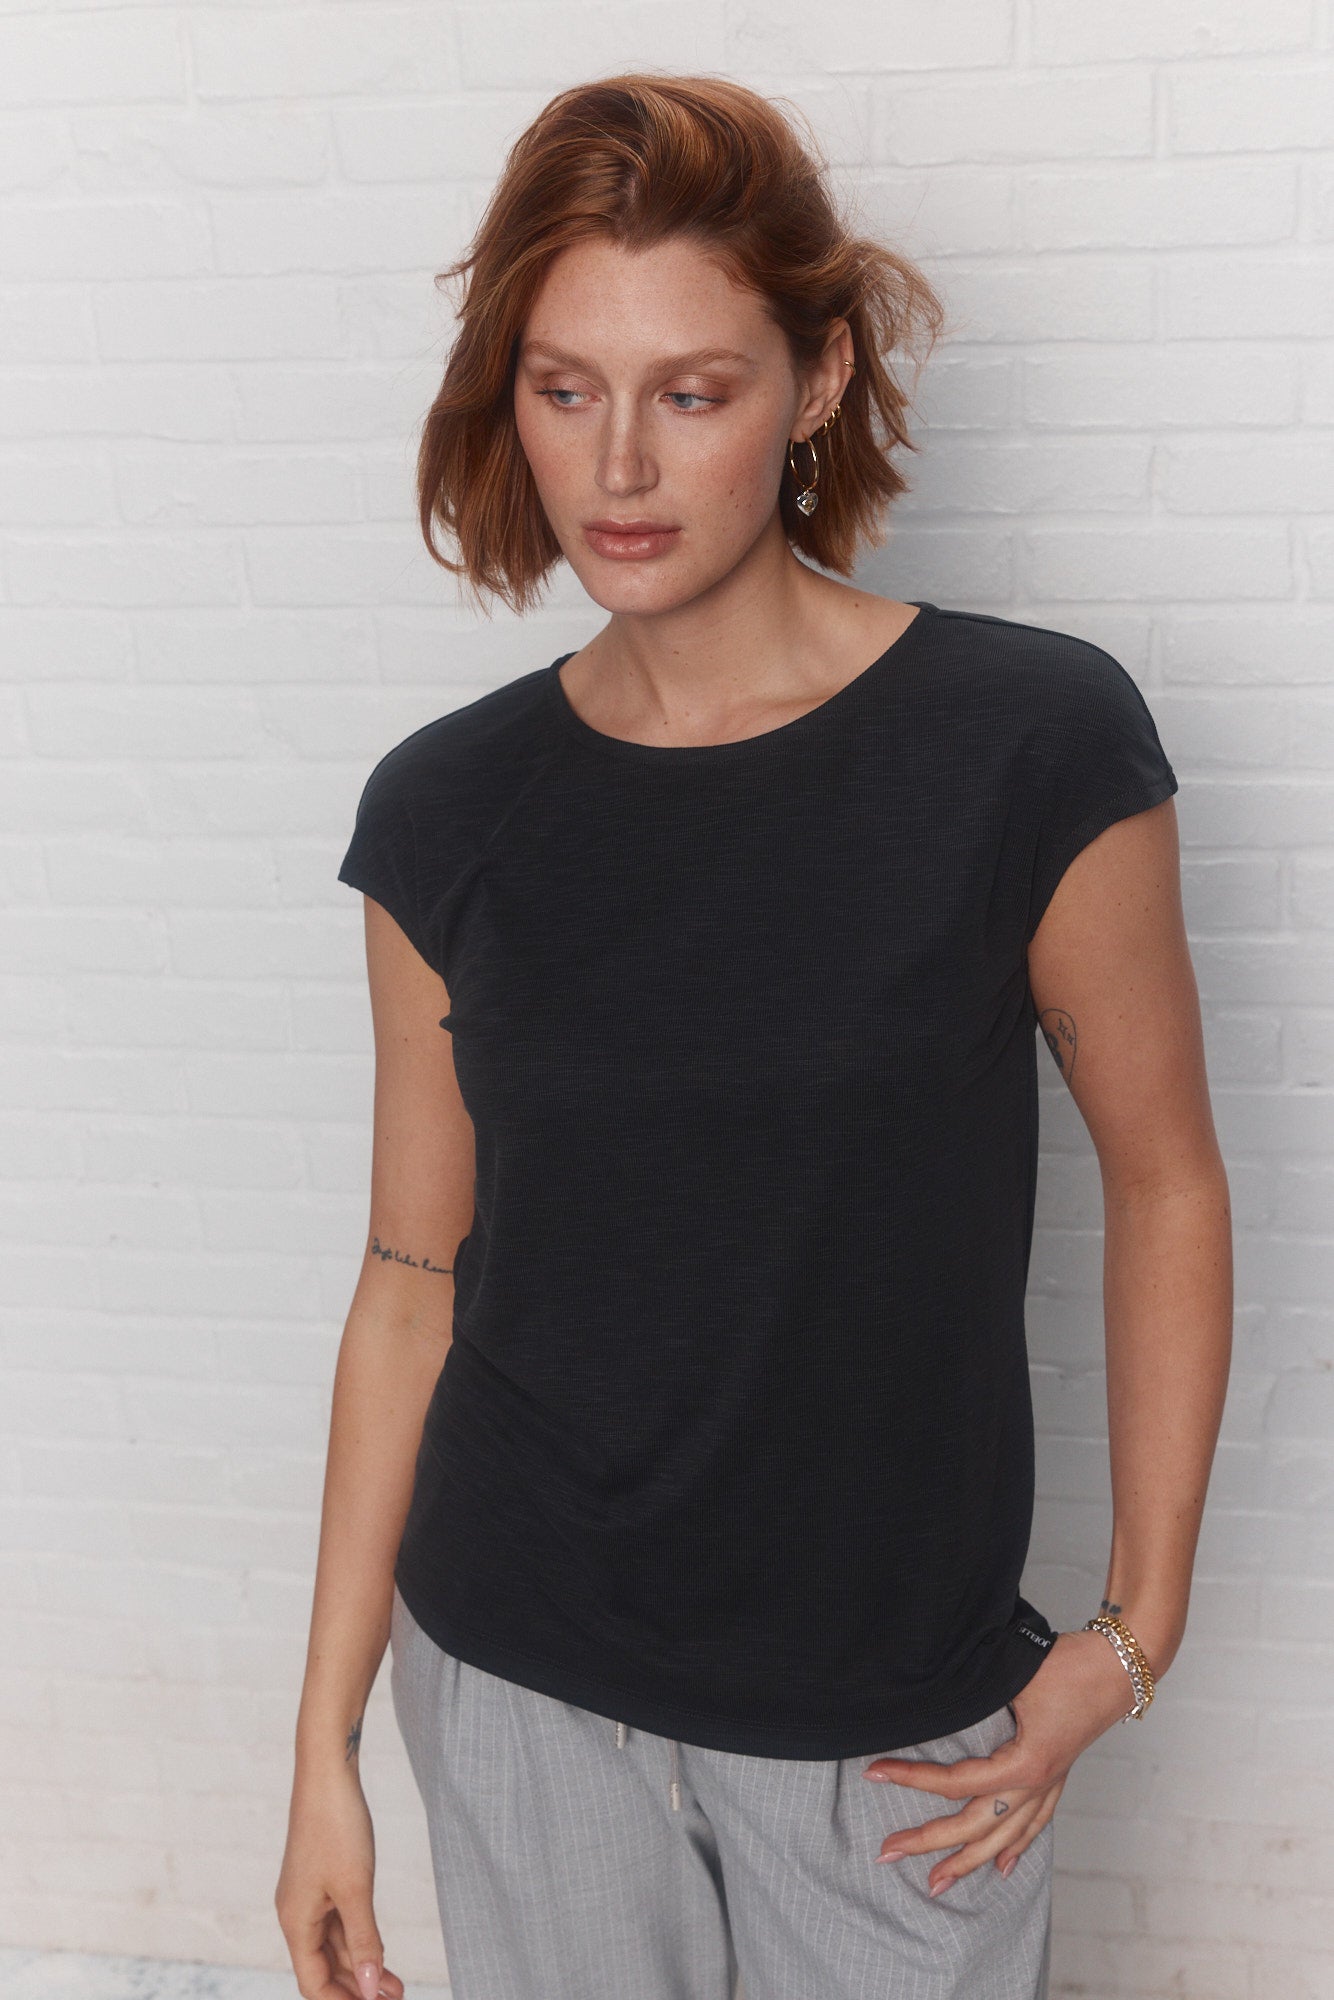 Black cap sleeve t-shirt | Waverly